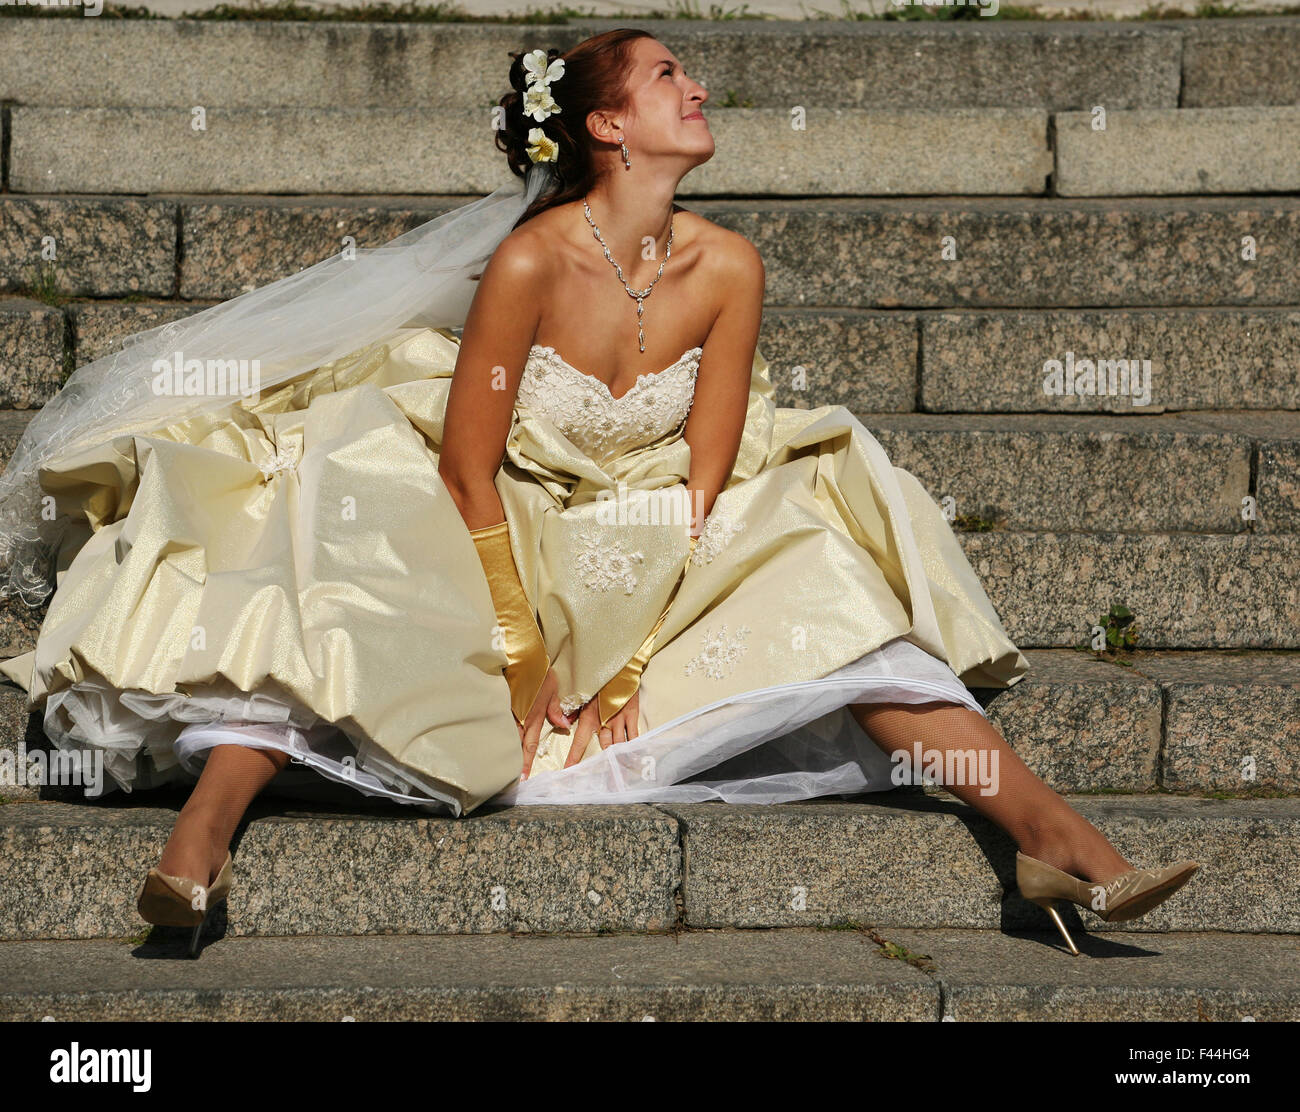 Beautiful bride Stock Photo